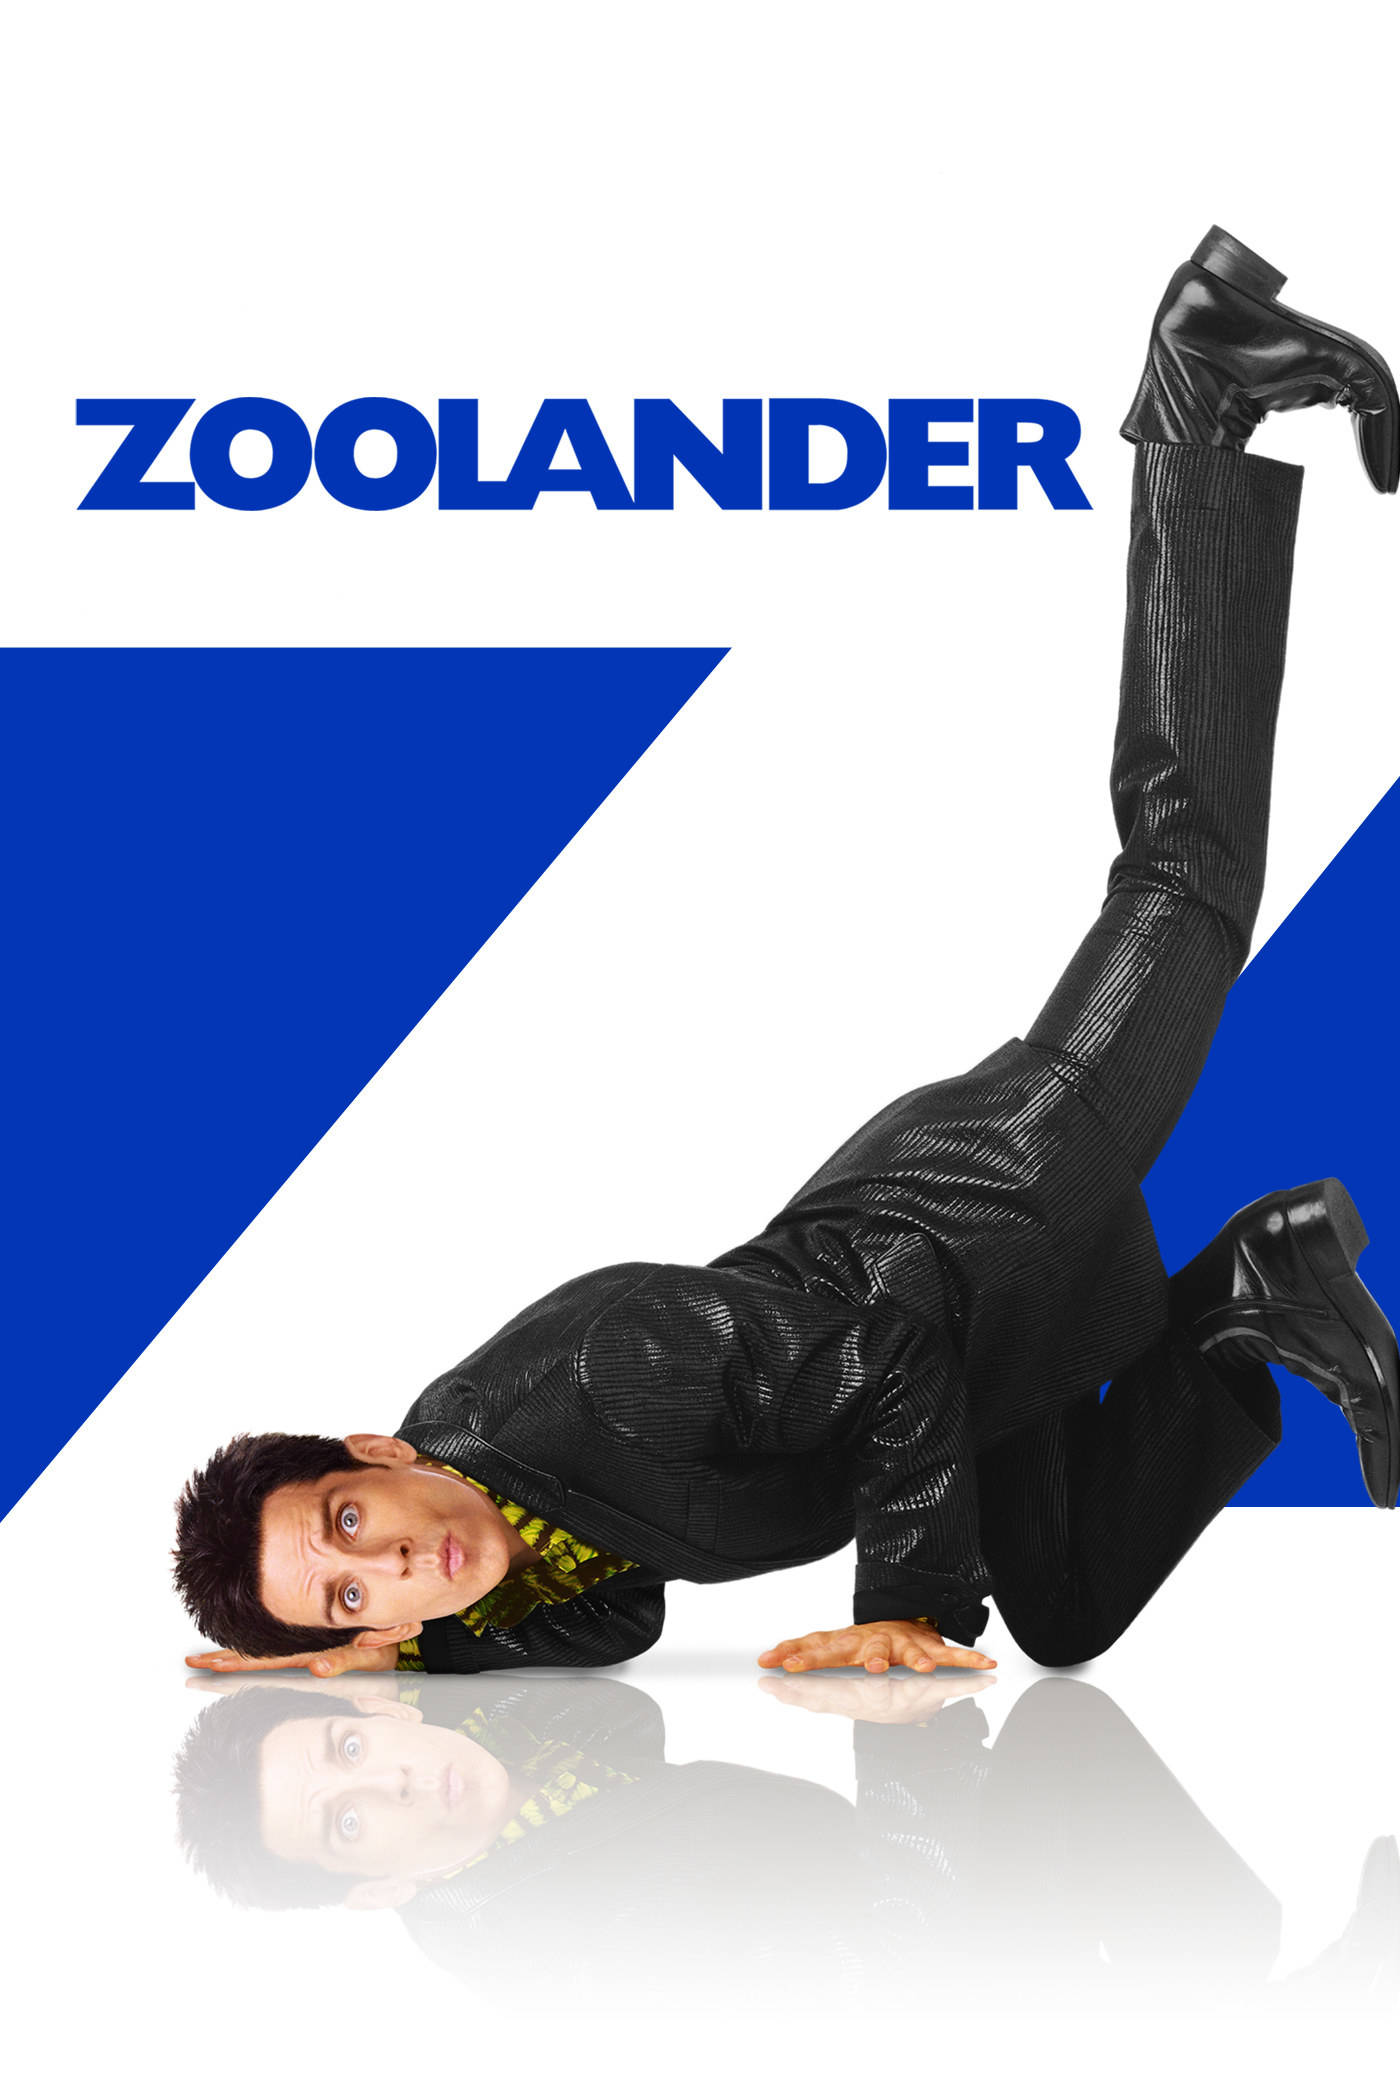 Movie poster for Zoolander